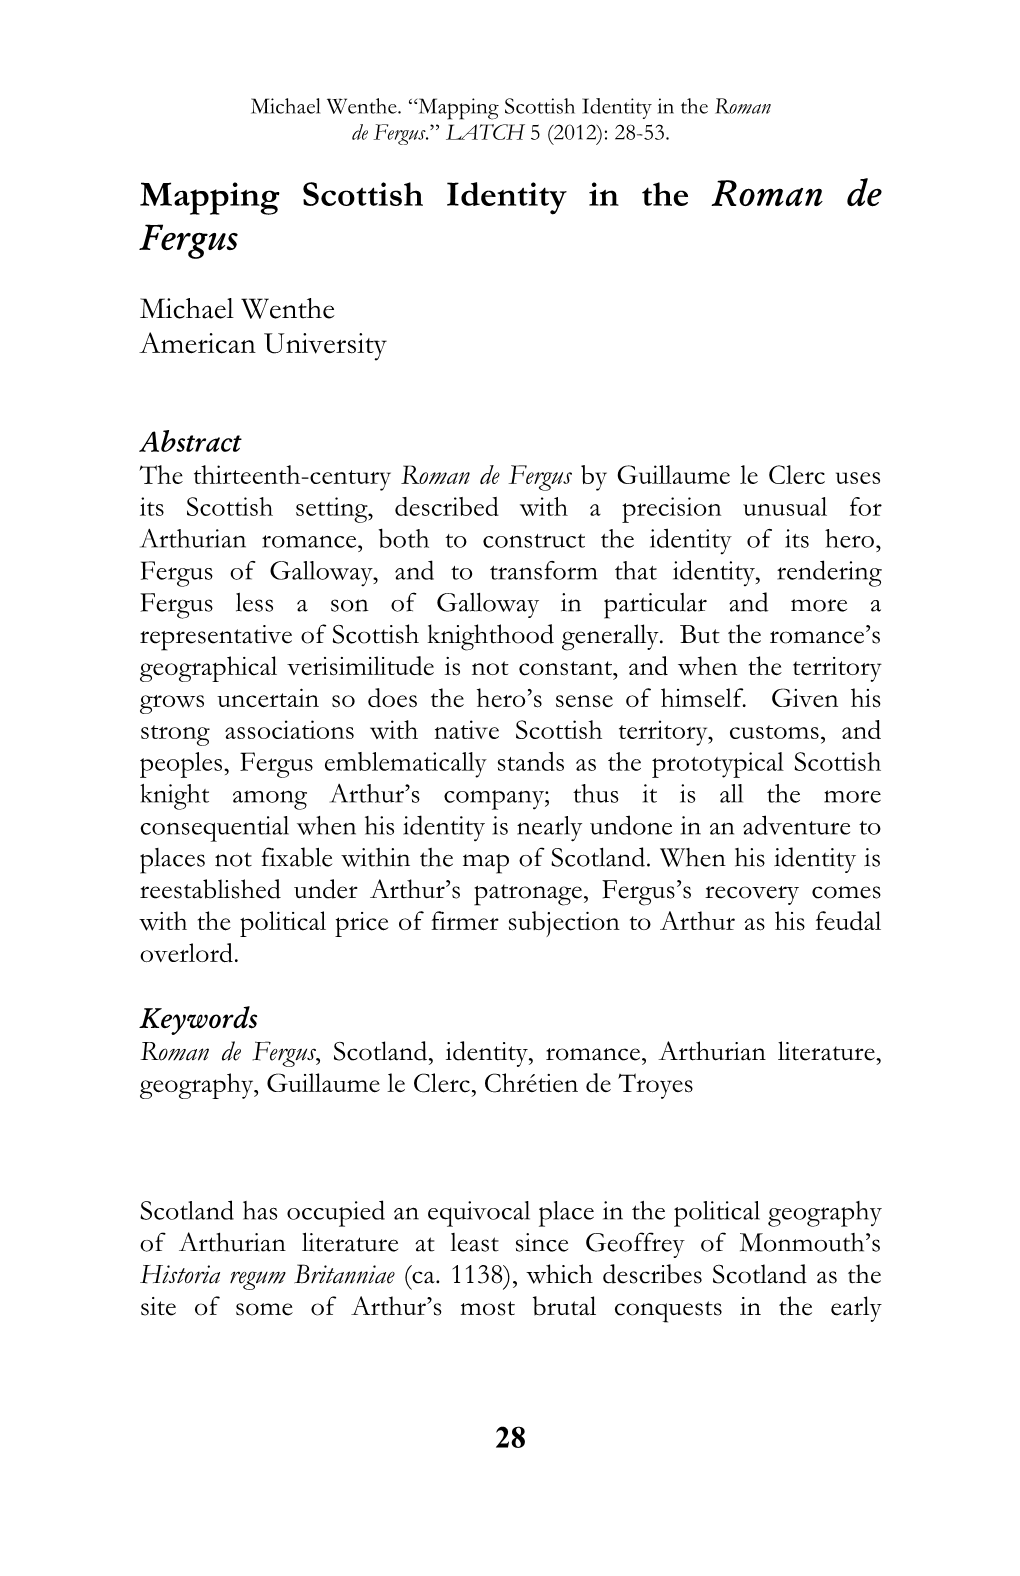 Mapping Scottish Identity in the Roman De Fergus.” LATCH 5 (2012): 28-53